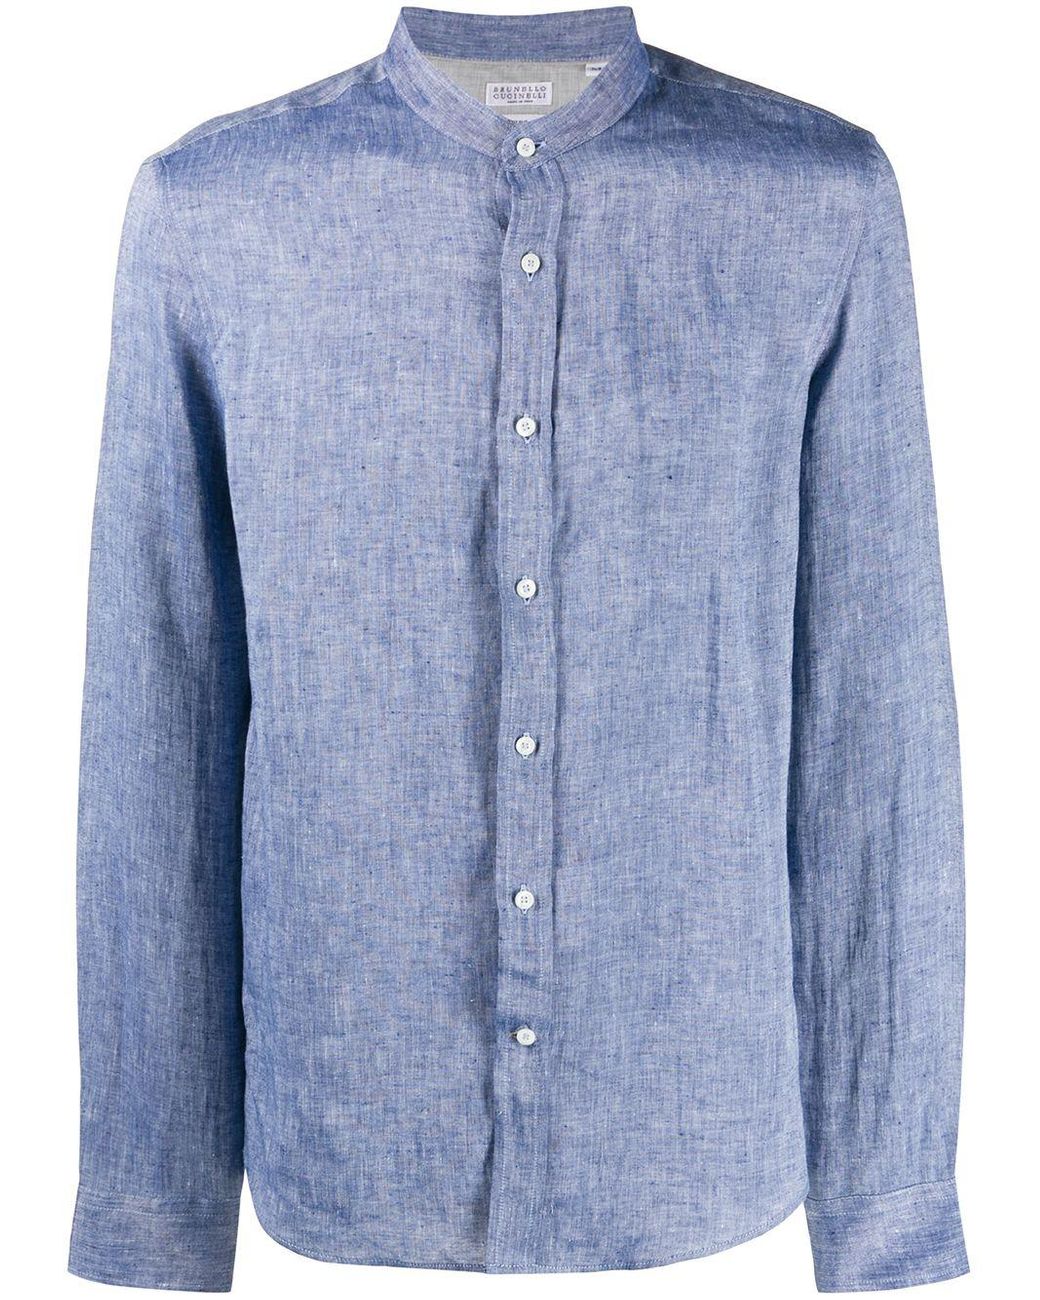 Brunello Cucinelli Linen Band Collar Shirt in Blue for Men - Save 51% ...